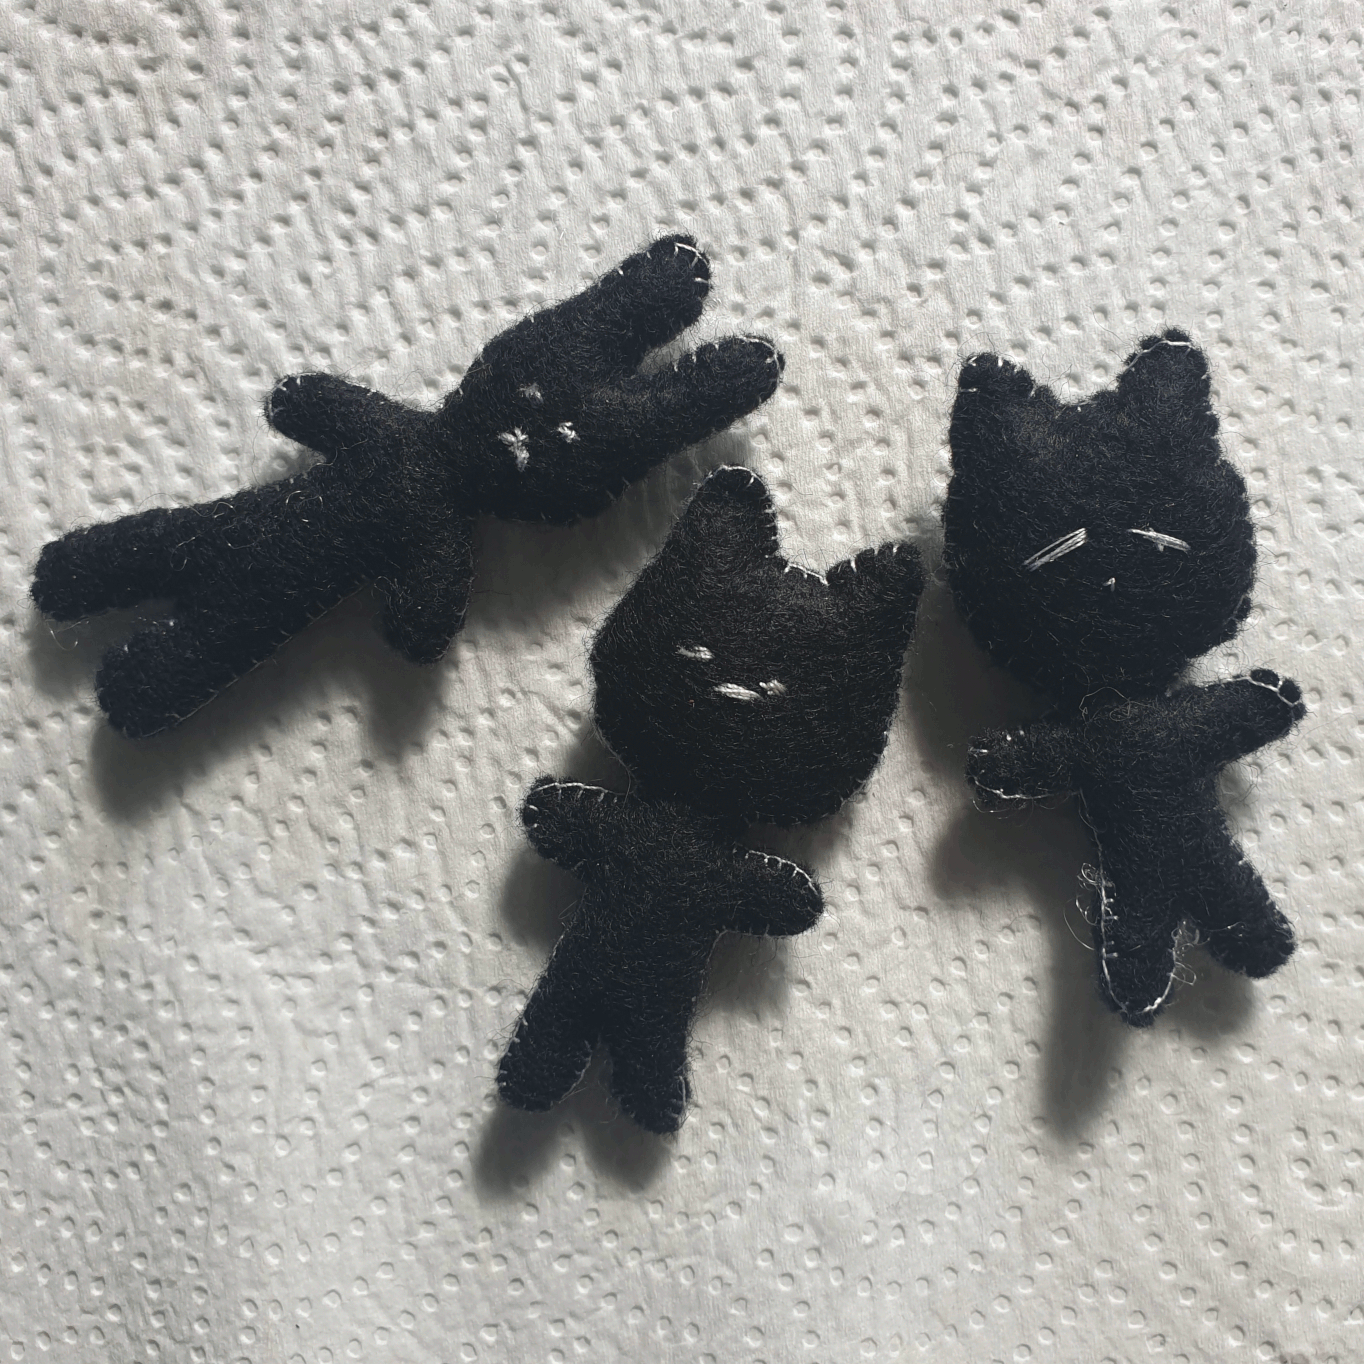 2 black felt cats with white stitching